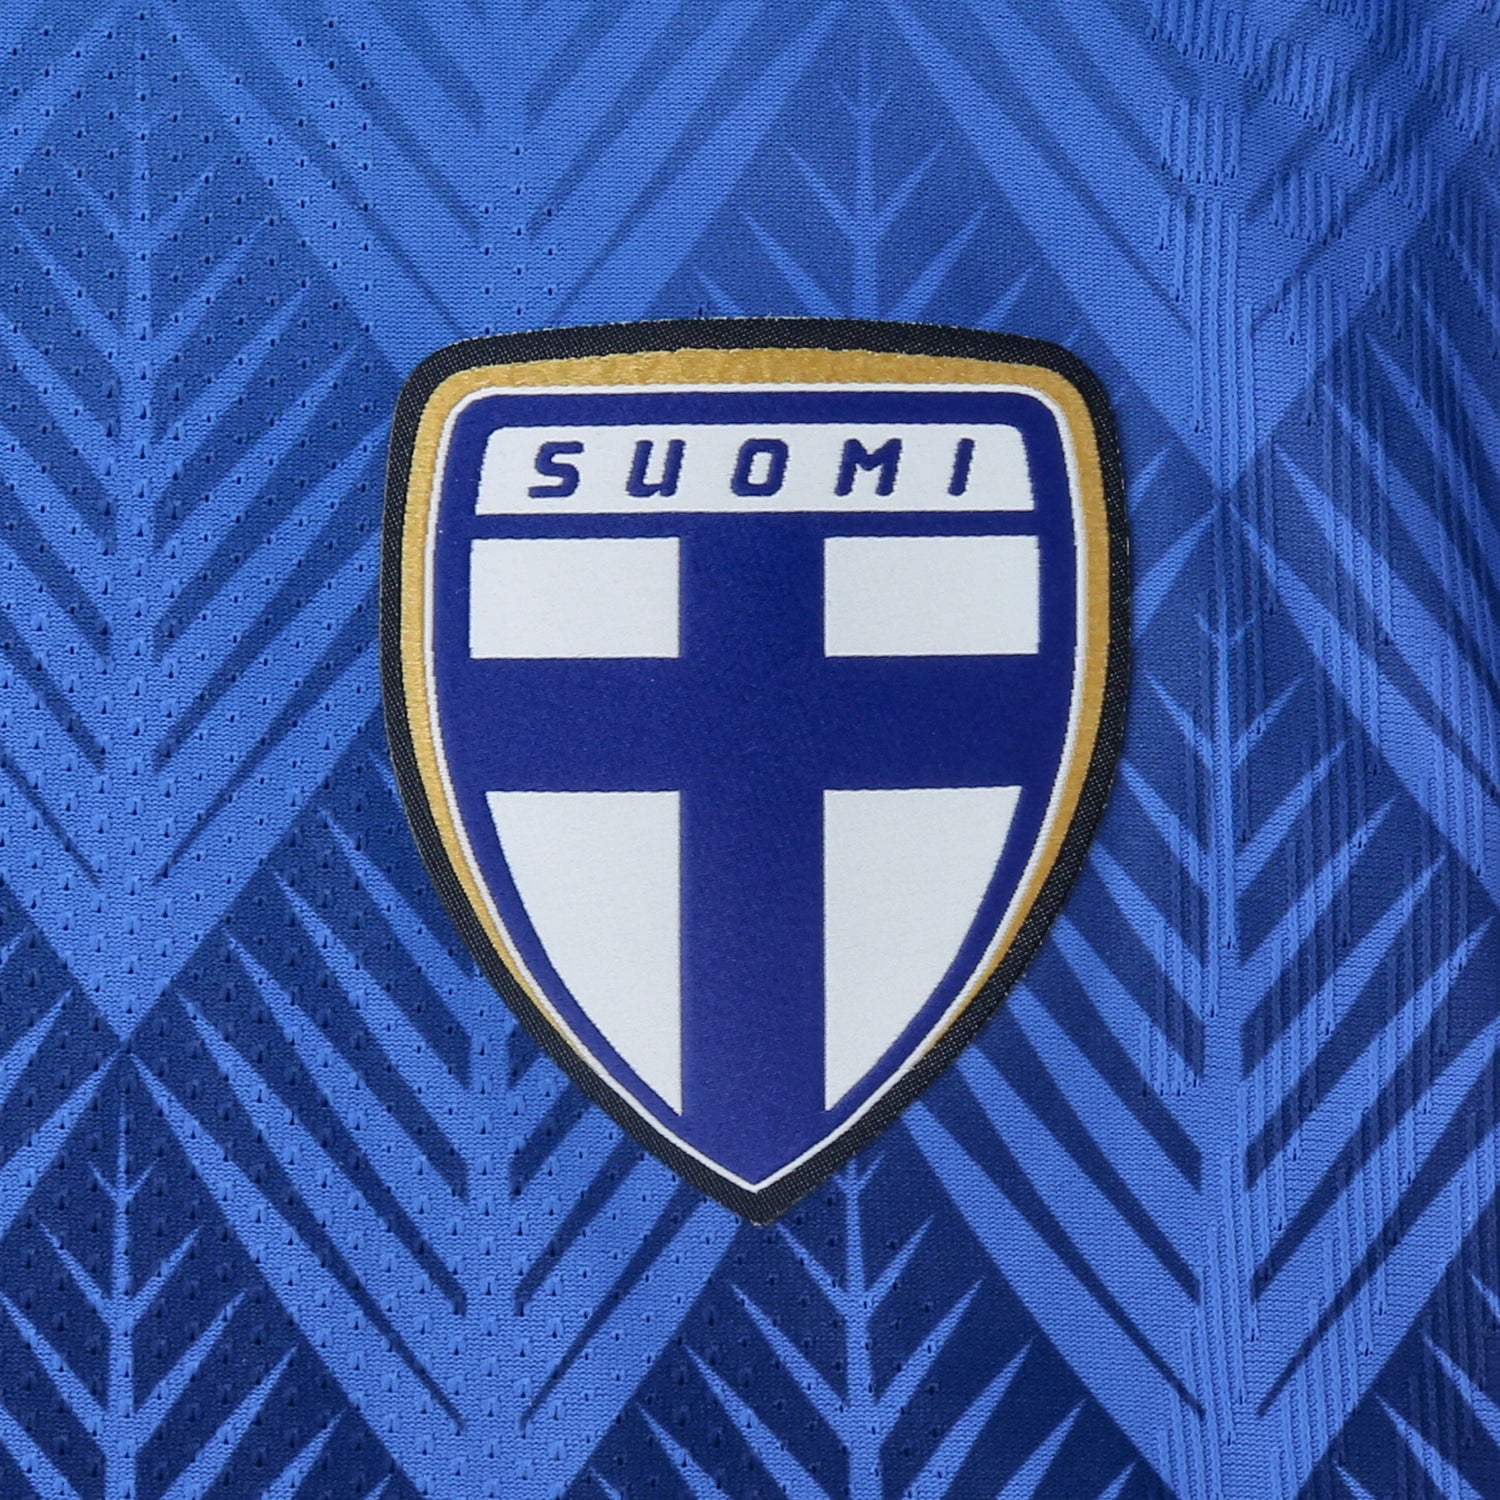 Finland Official Away Jersey 2022/23, Lingma print